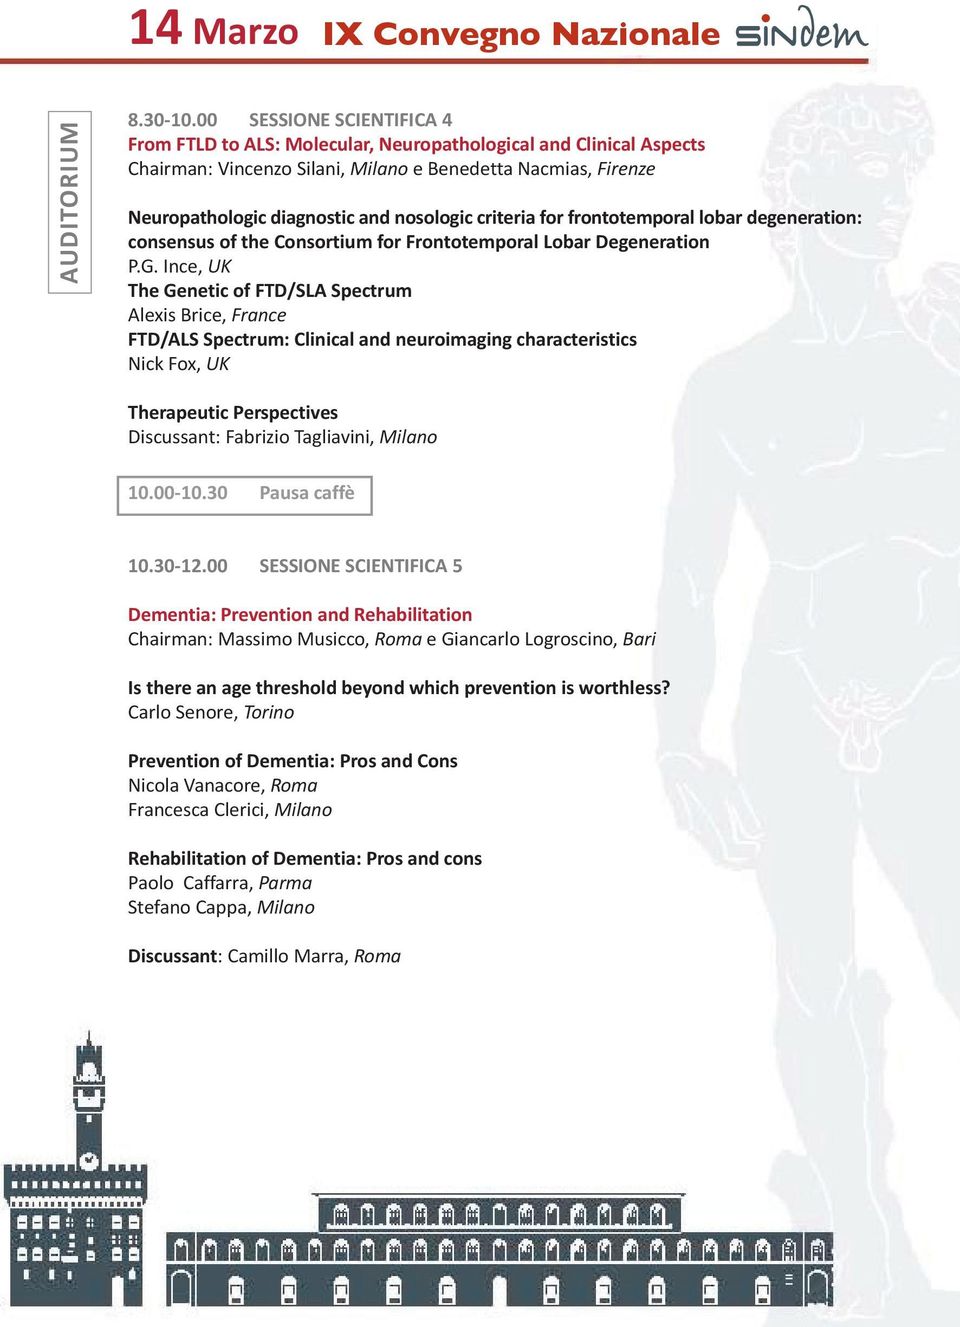 criteria for frontotemporal lobar degeneration: consensus of the Consortium for Frontotemporal Lobar Degeneration P.G.